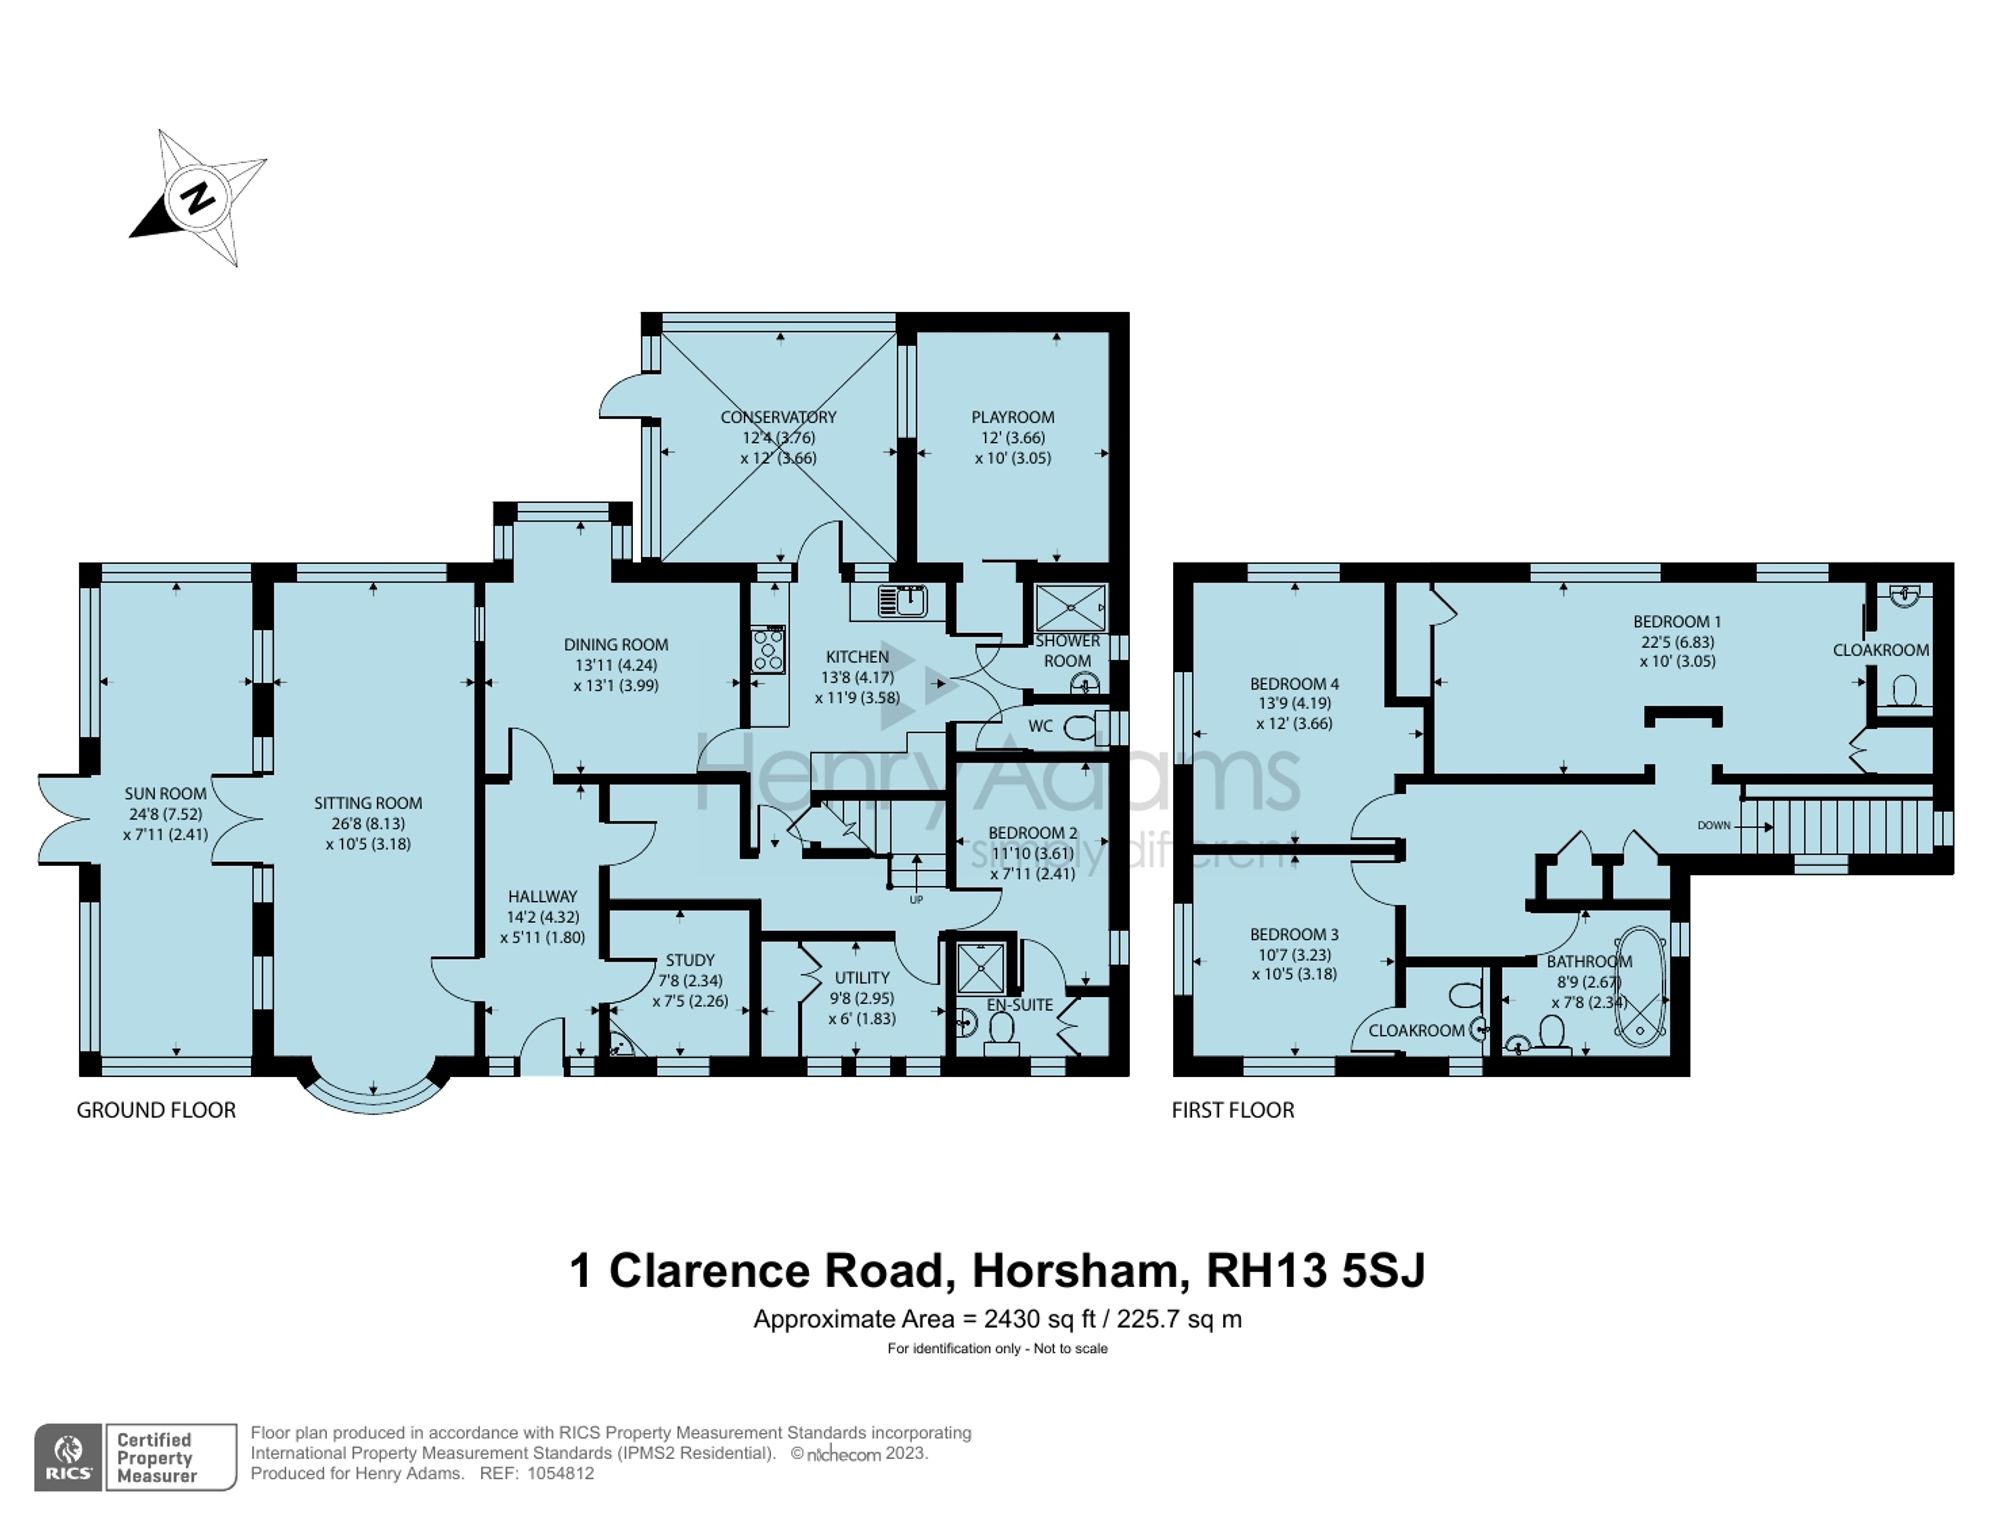 Clarence Road, Horsham, RH13 floorplans